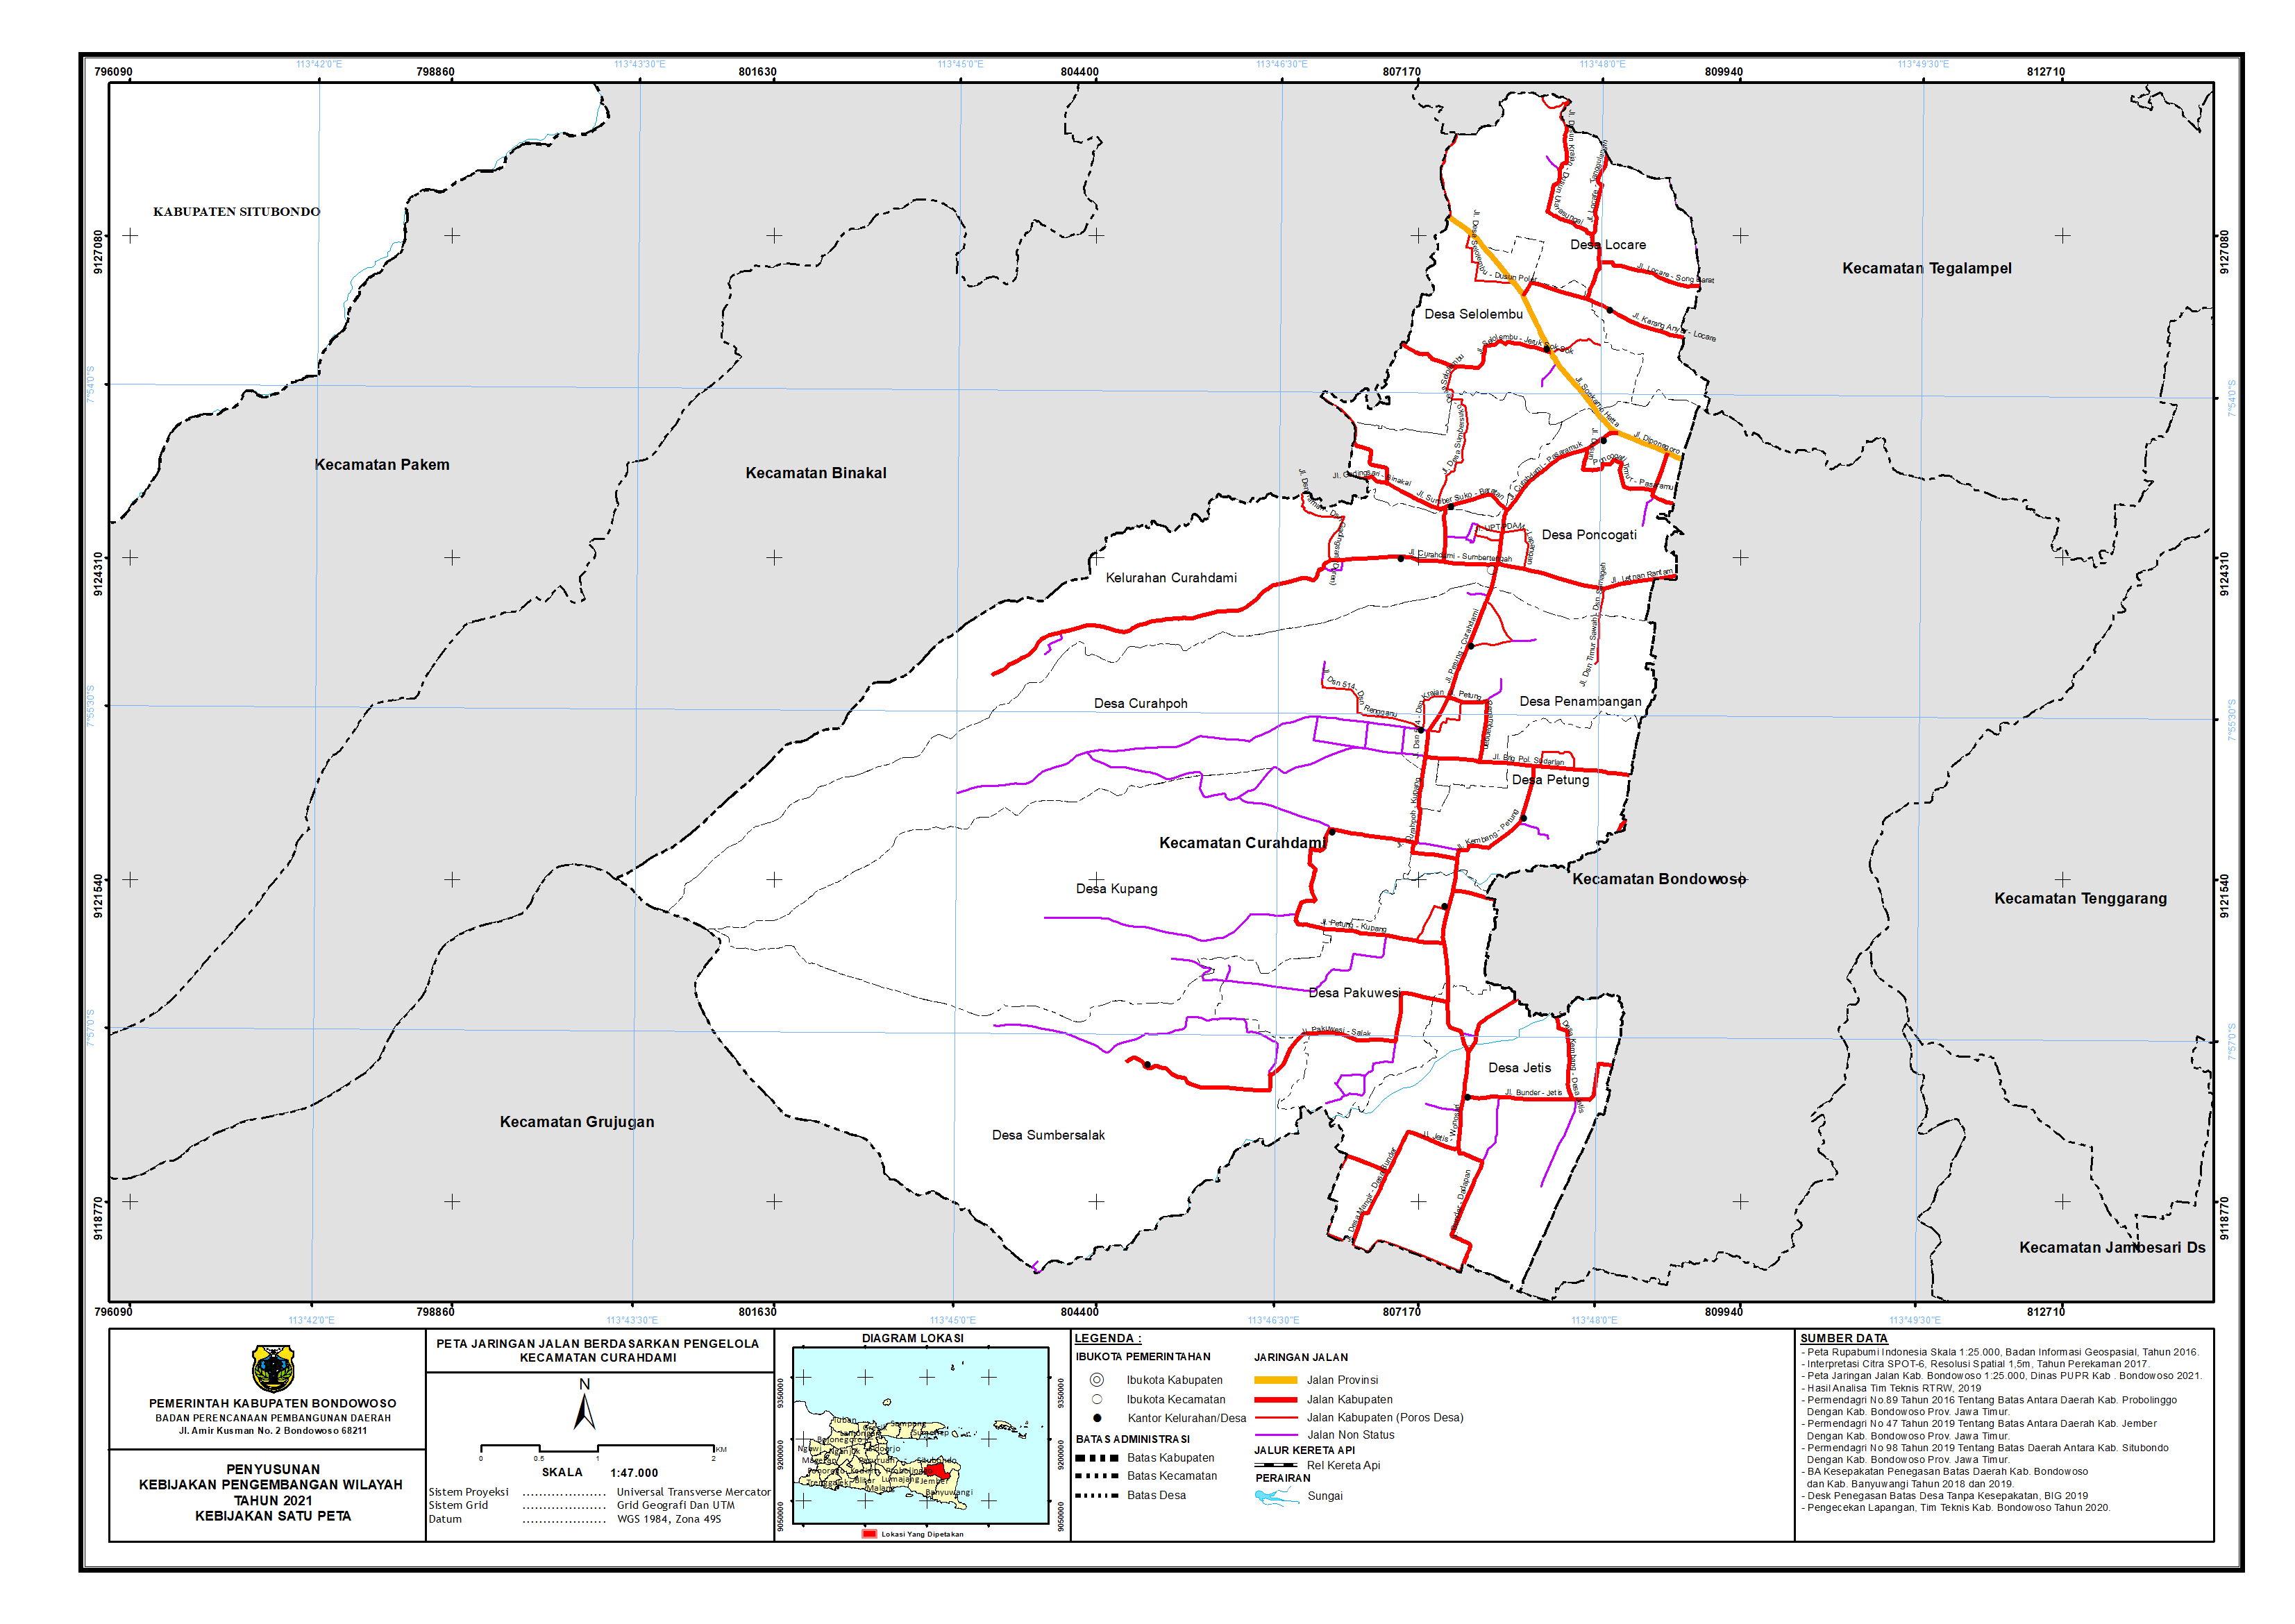 Peta Jaringan Jalan Berdasarkan Pengelola Kecamatan Curahdami.png